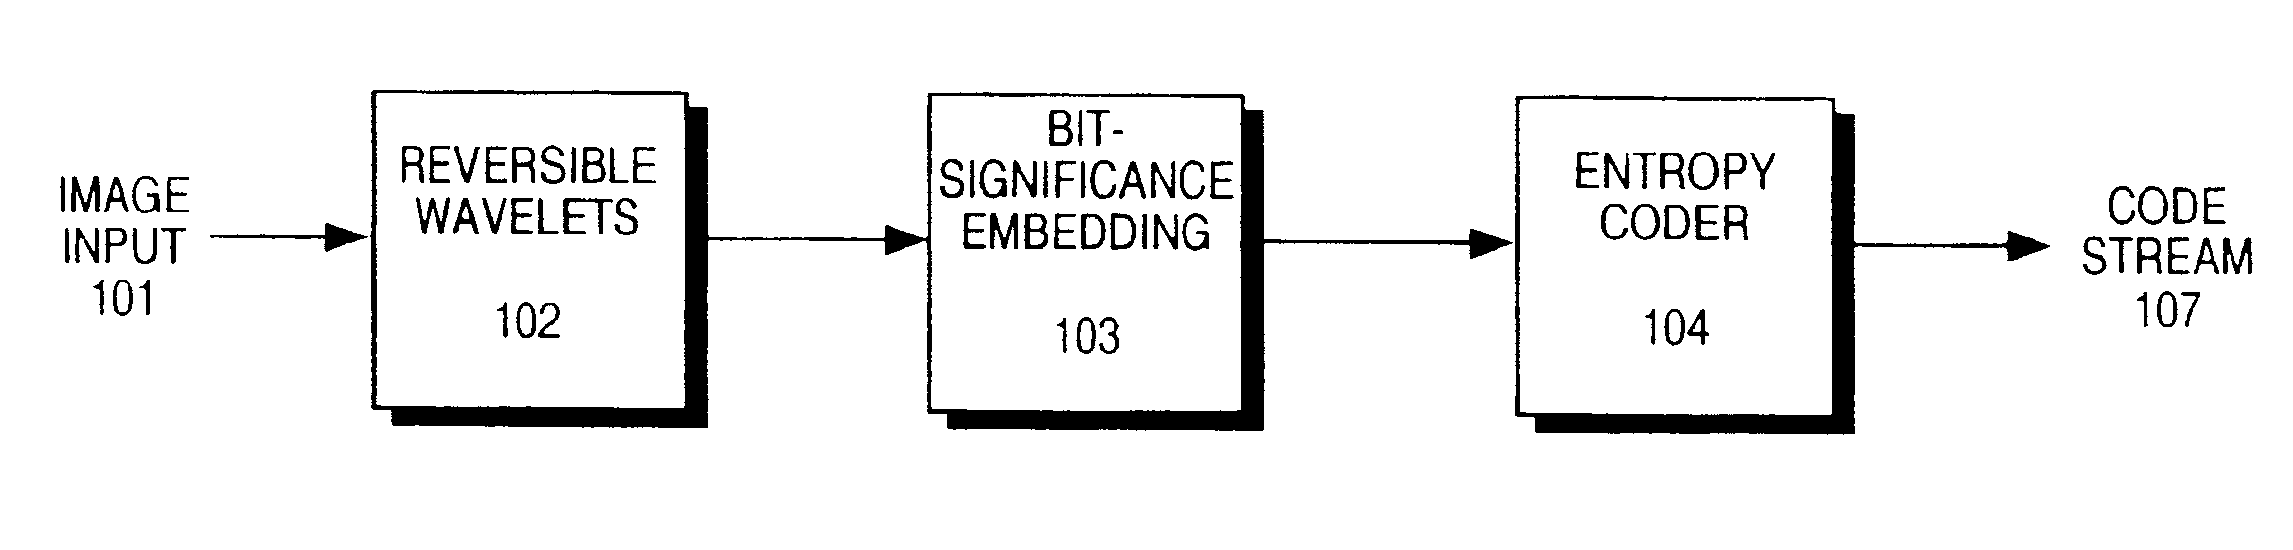 Method for compression using reversible embedded wavelets